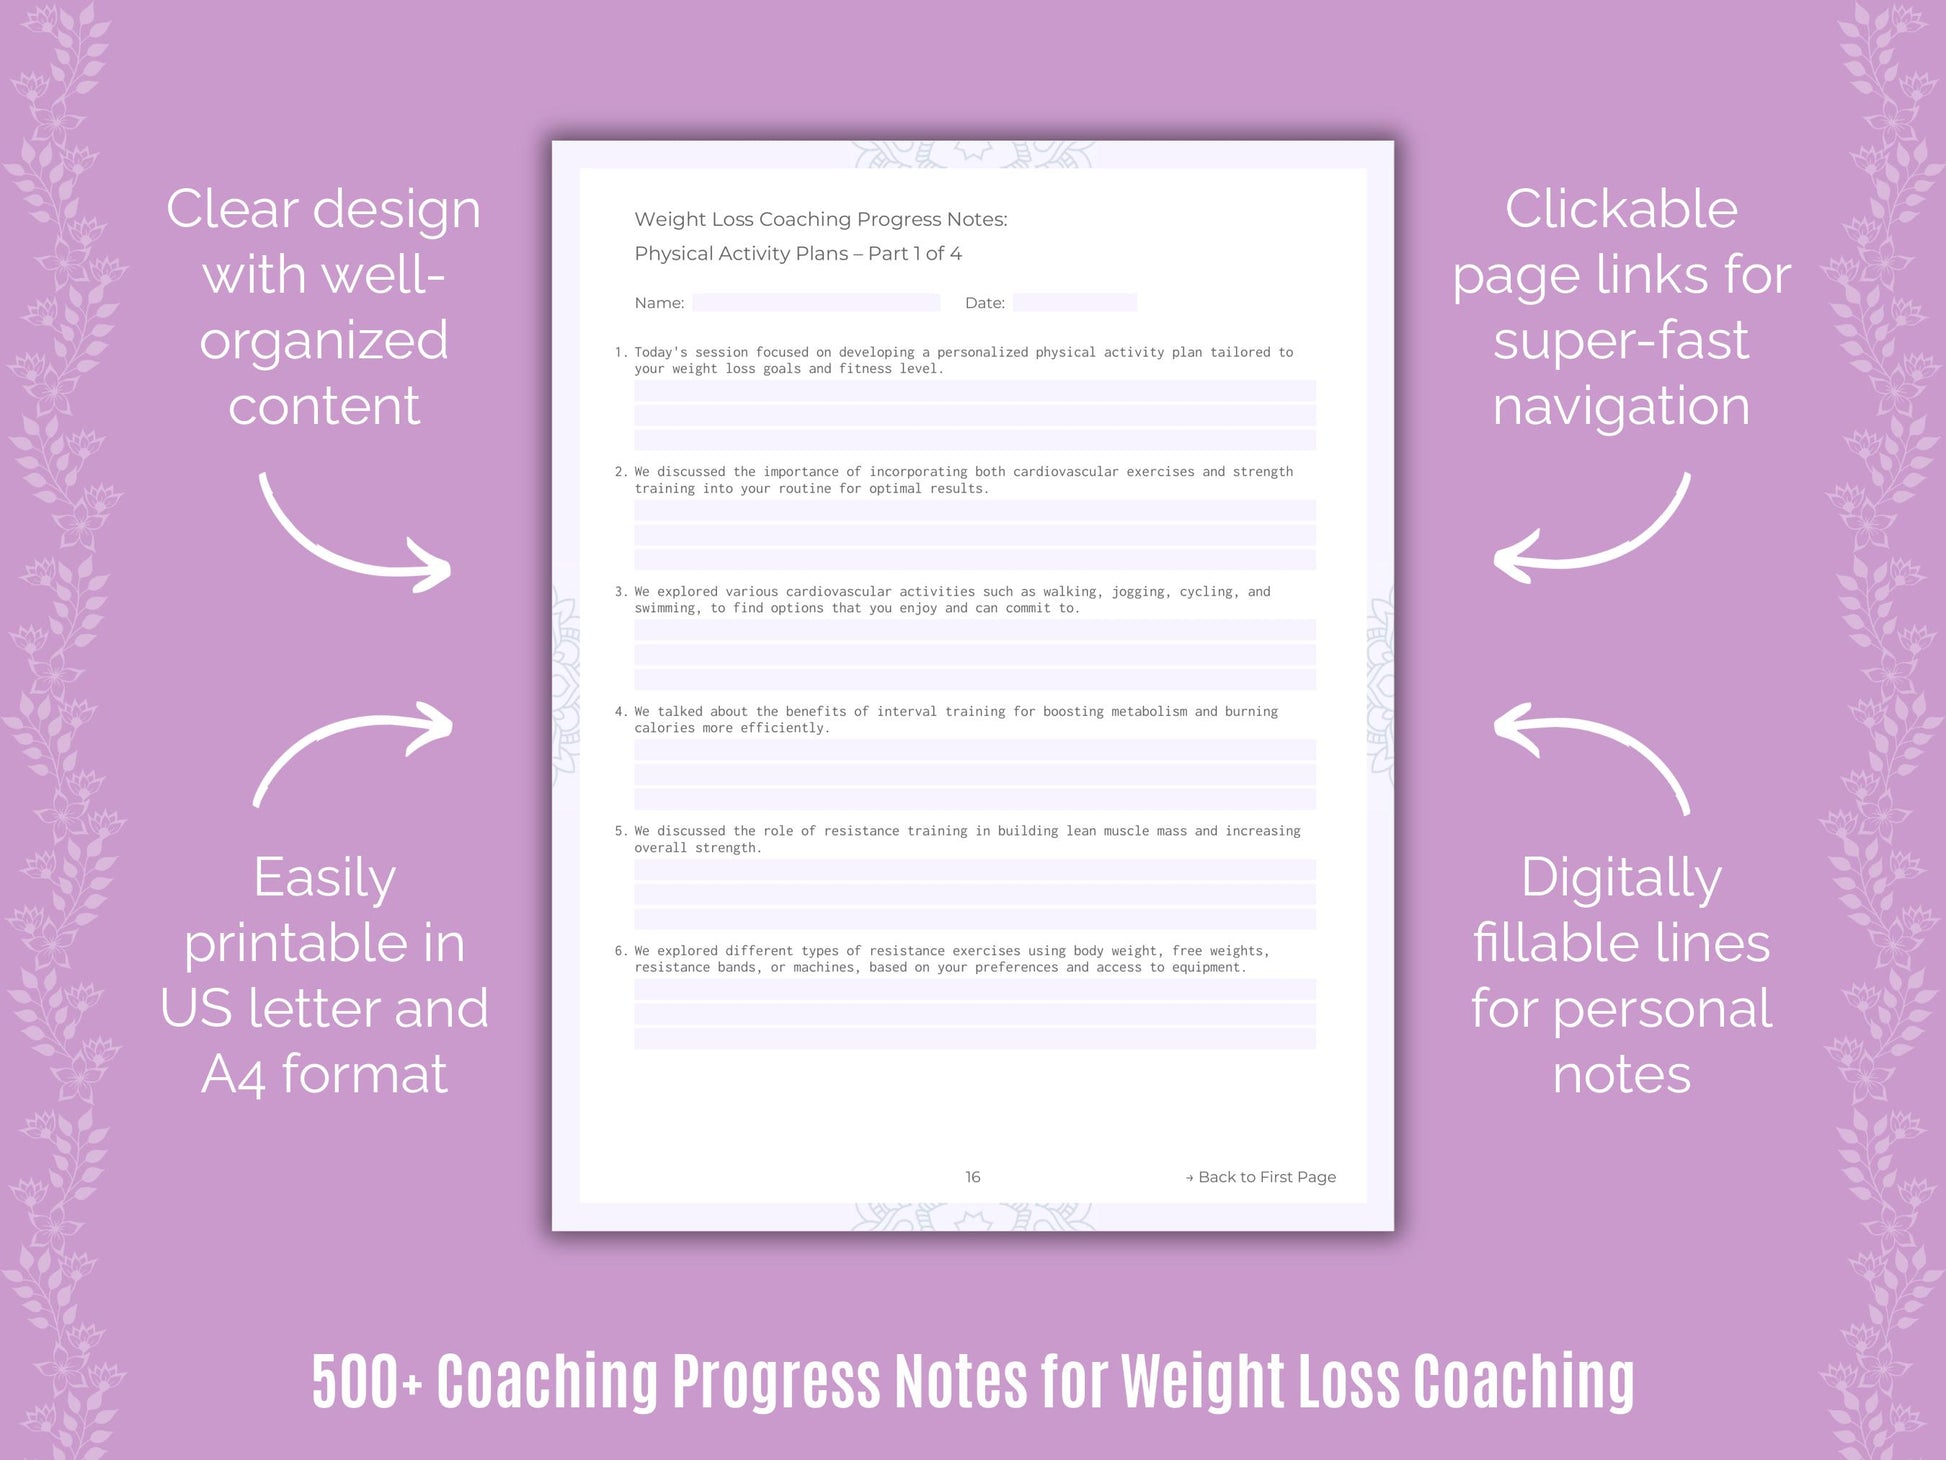 Weight Loss Coaching Resource